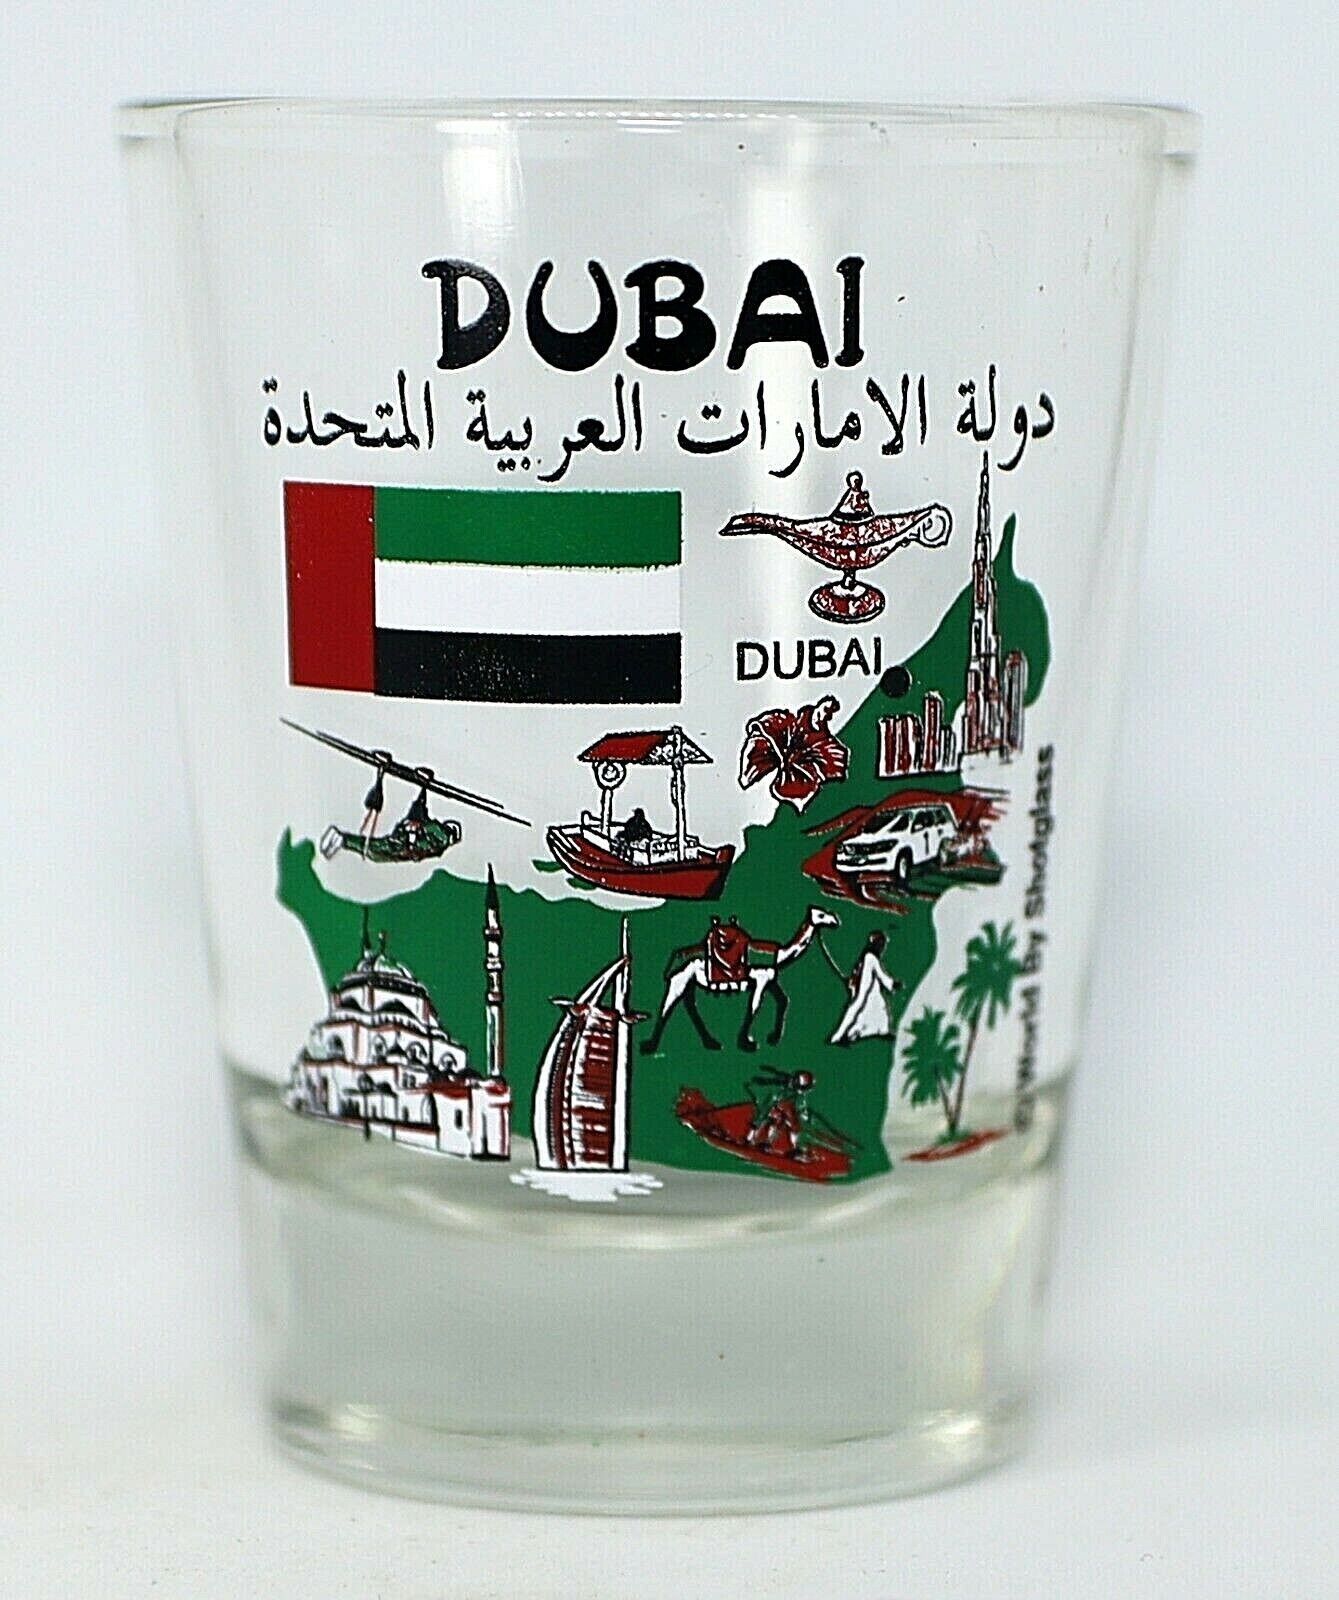 DUBAI UNITED ARAB EMIRATES (UAE) LANDMARKS COLLAGE SHOT GLASS SHOTGLASS